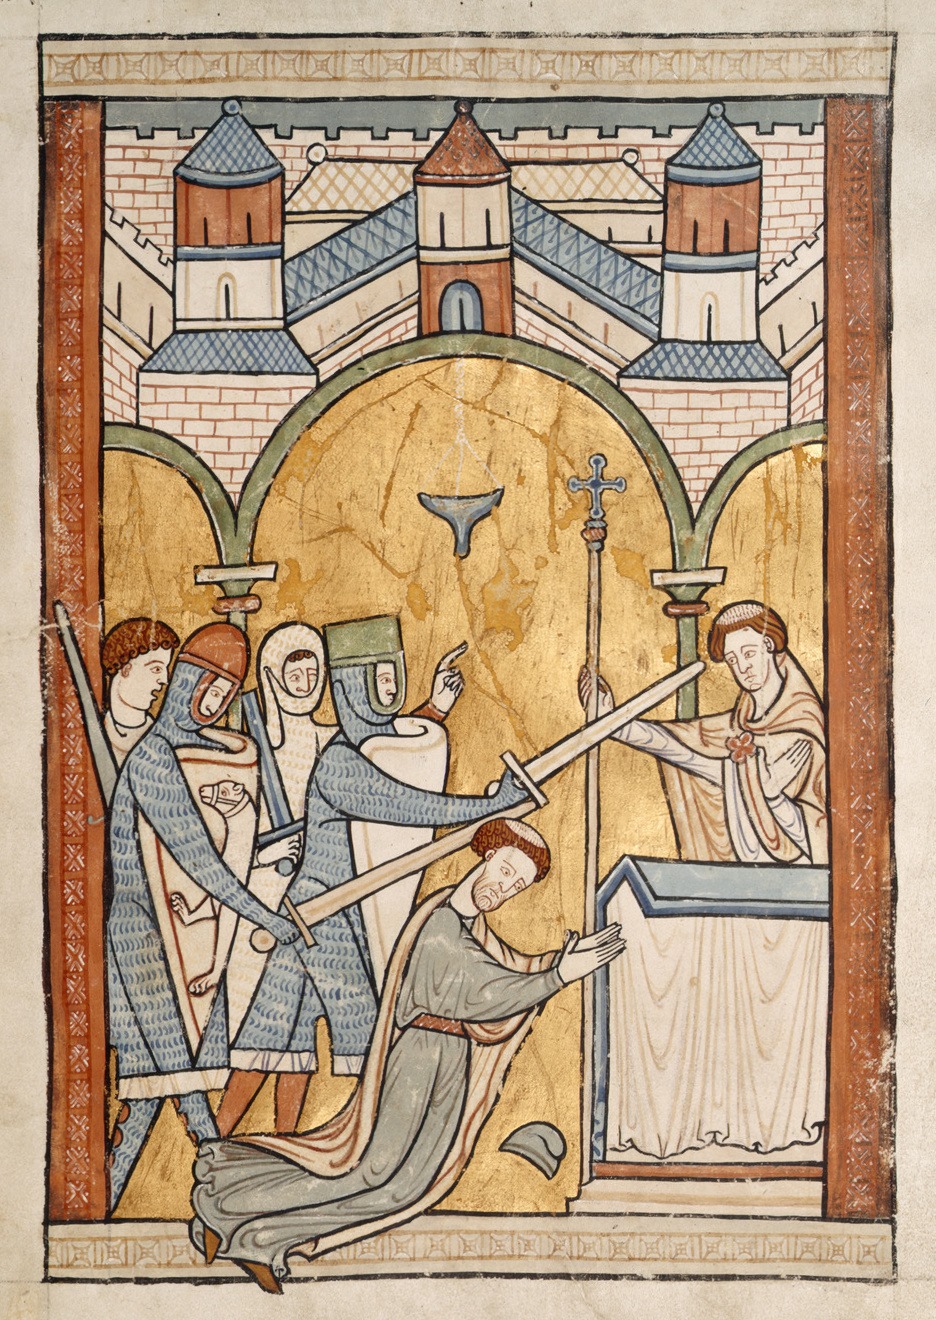 St Thomas Becket